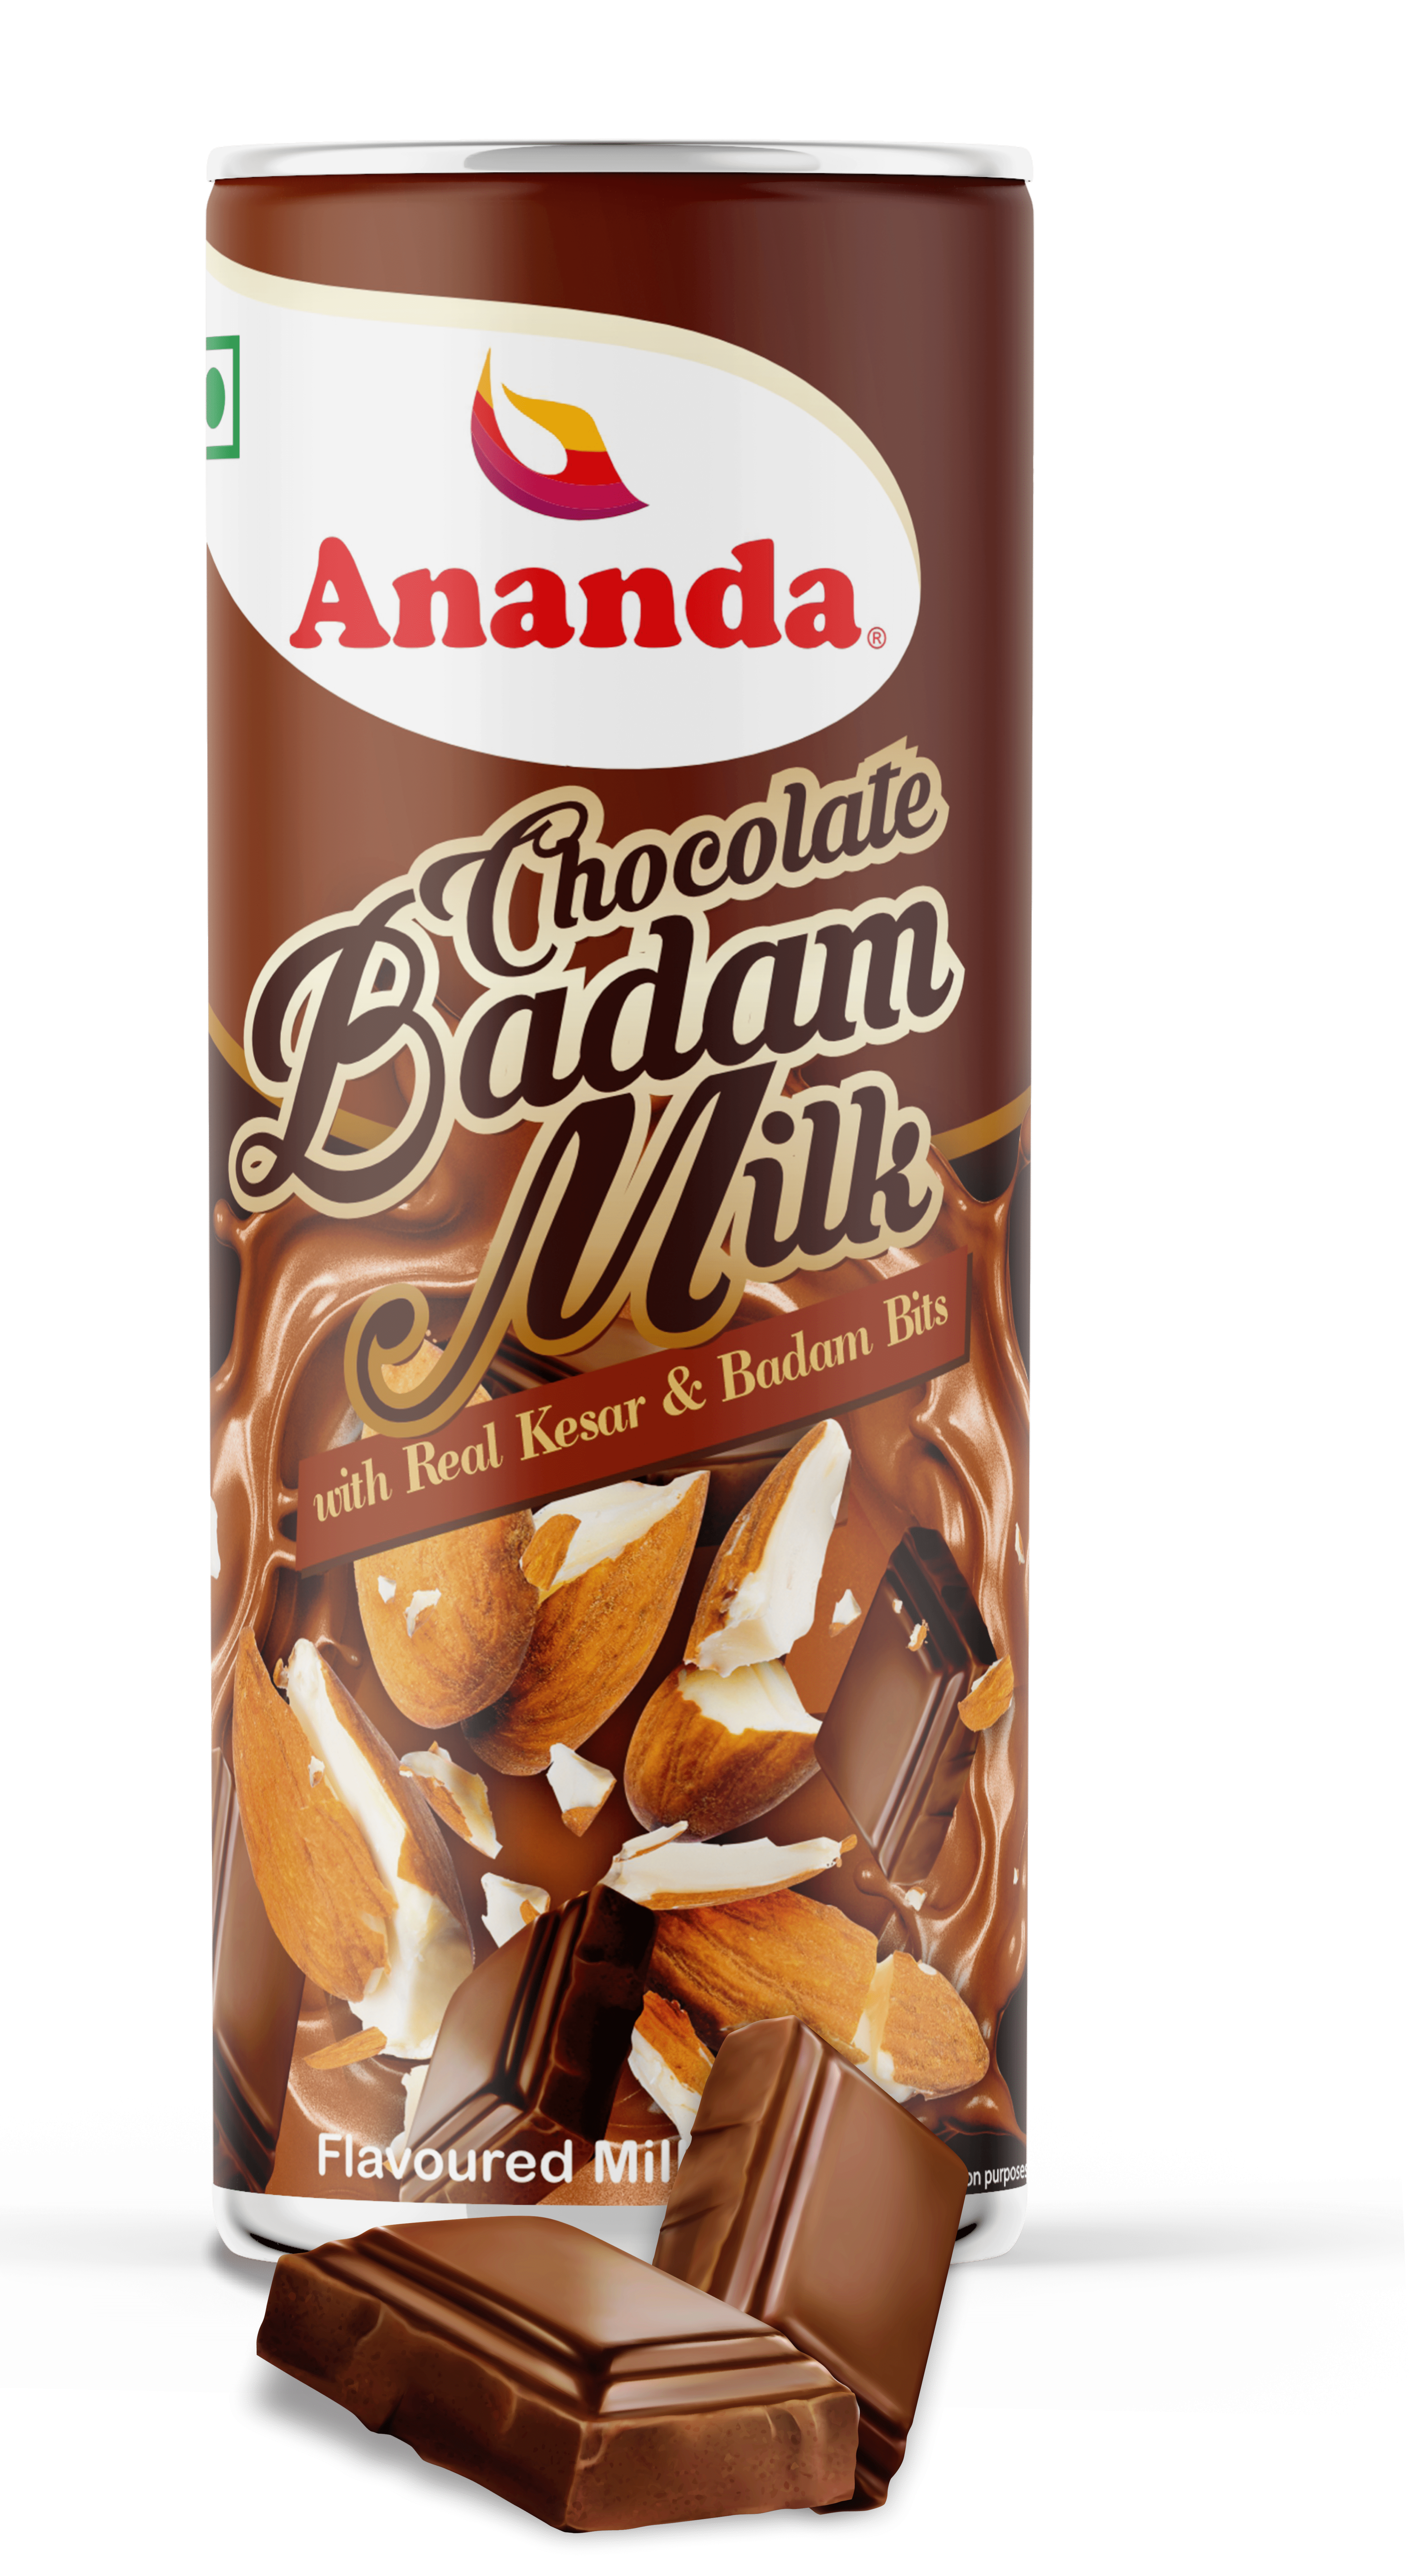 Chocolate Badam Milk Cans